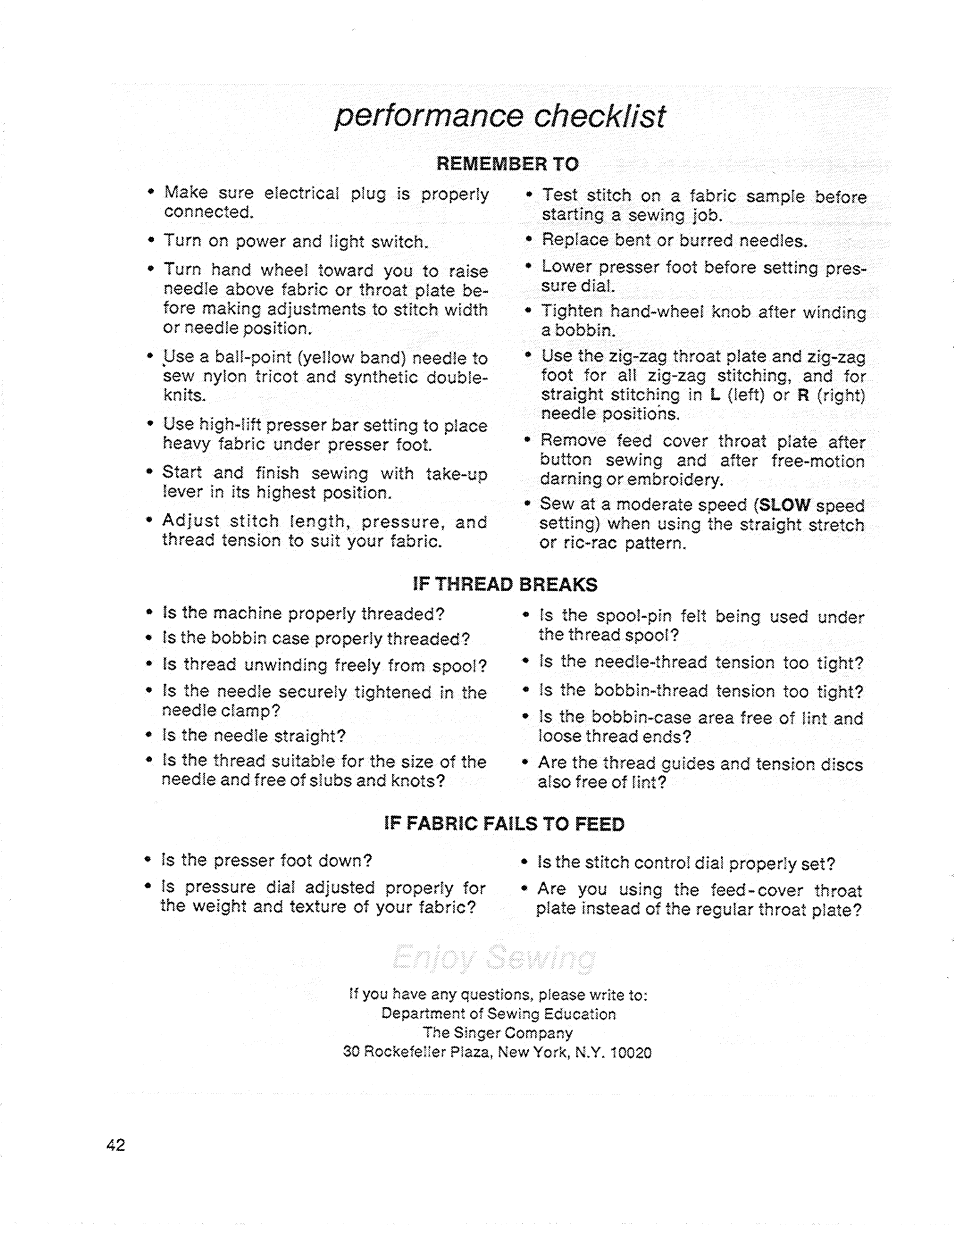 Performance checklist, Departmerd | SINGER 717 Scholastic User Manual | Page 44 / 48